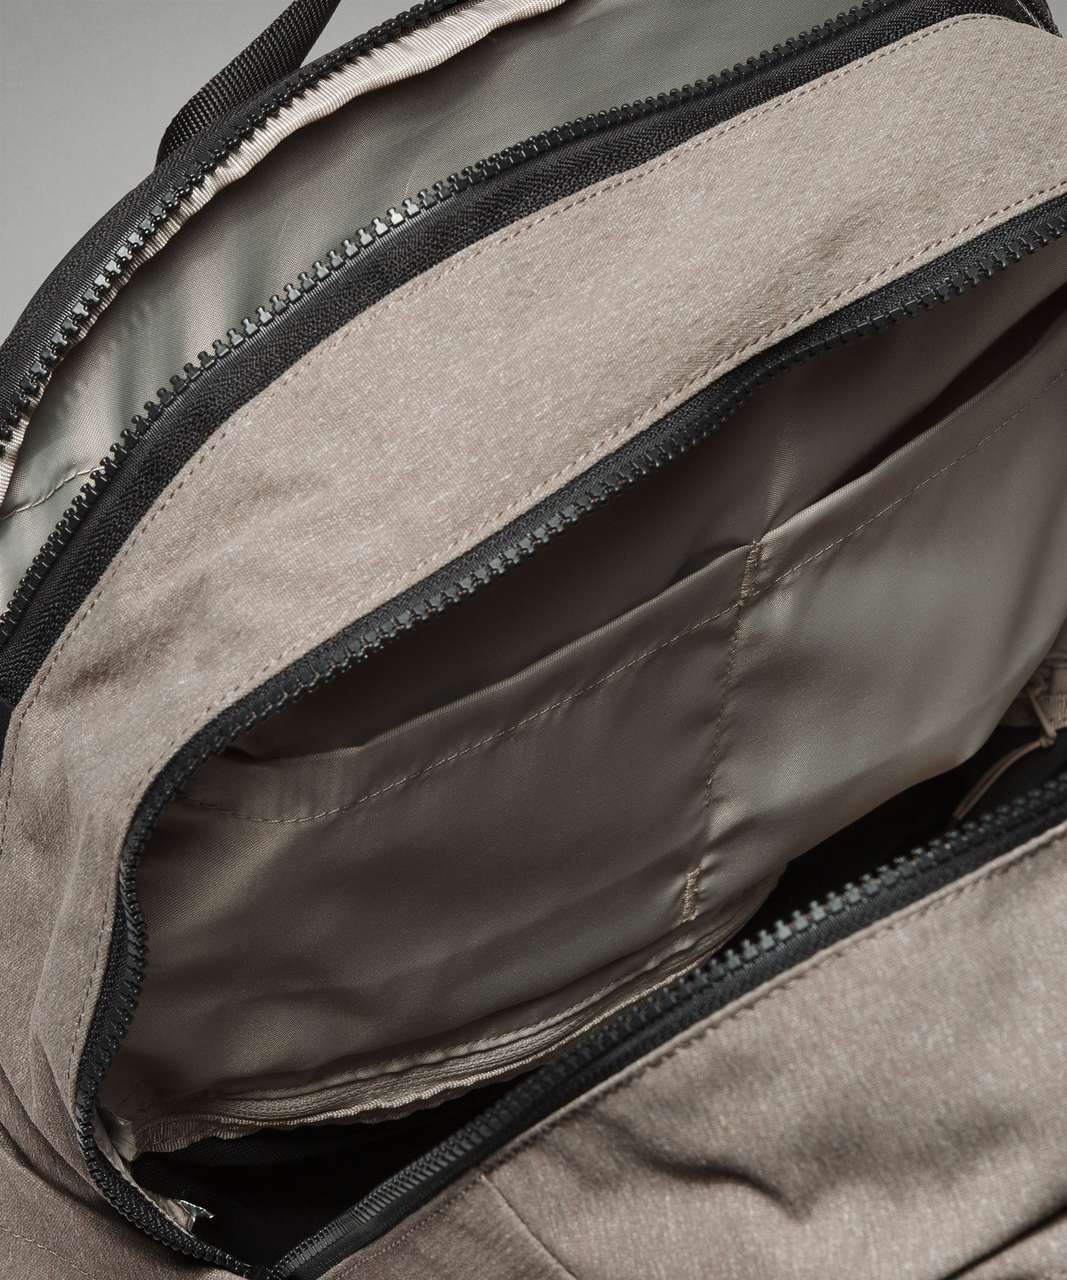 Lululemon Assert Backpack 2.0 24L - Heathered Rover / Raw Linen